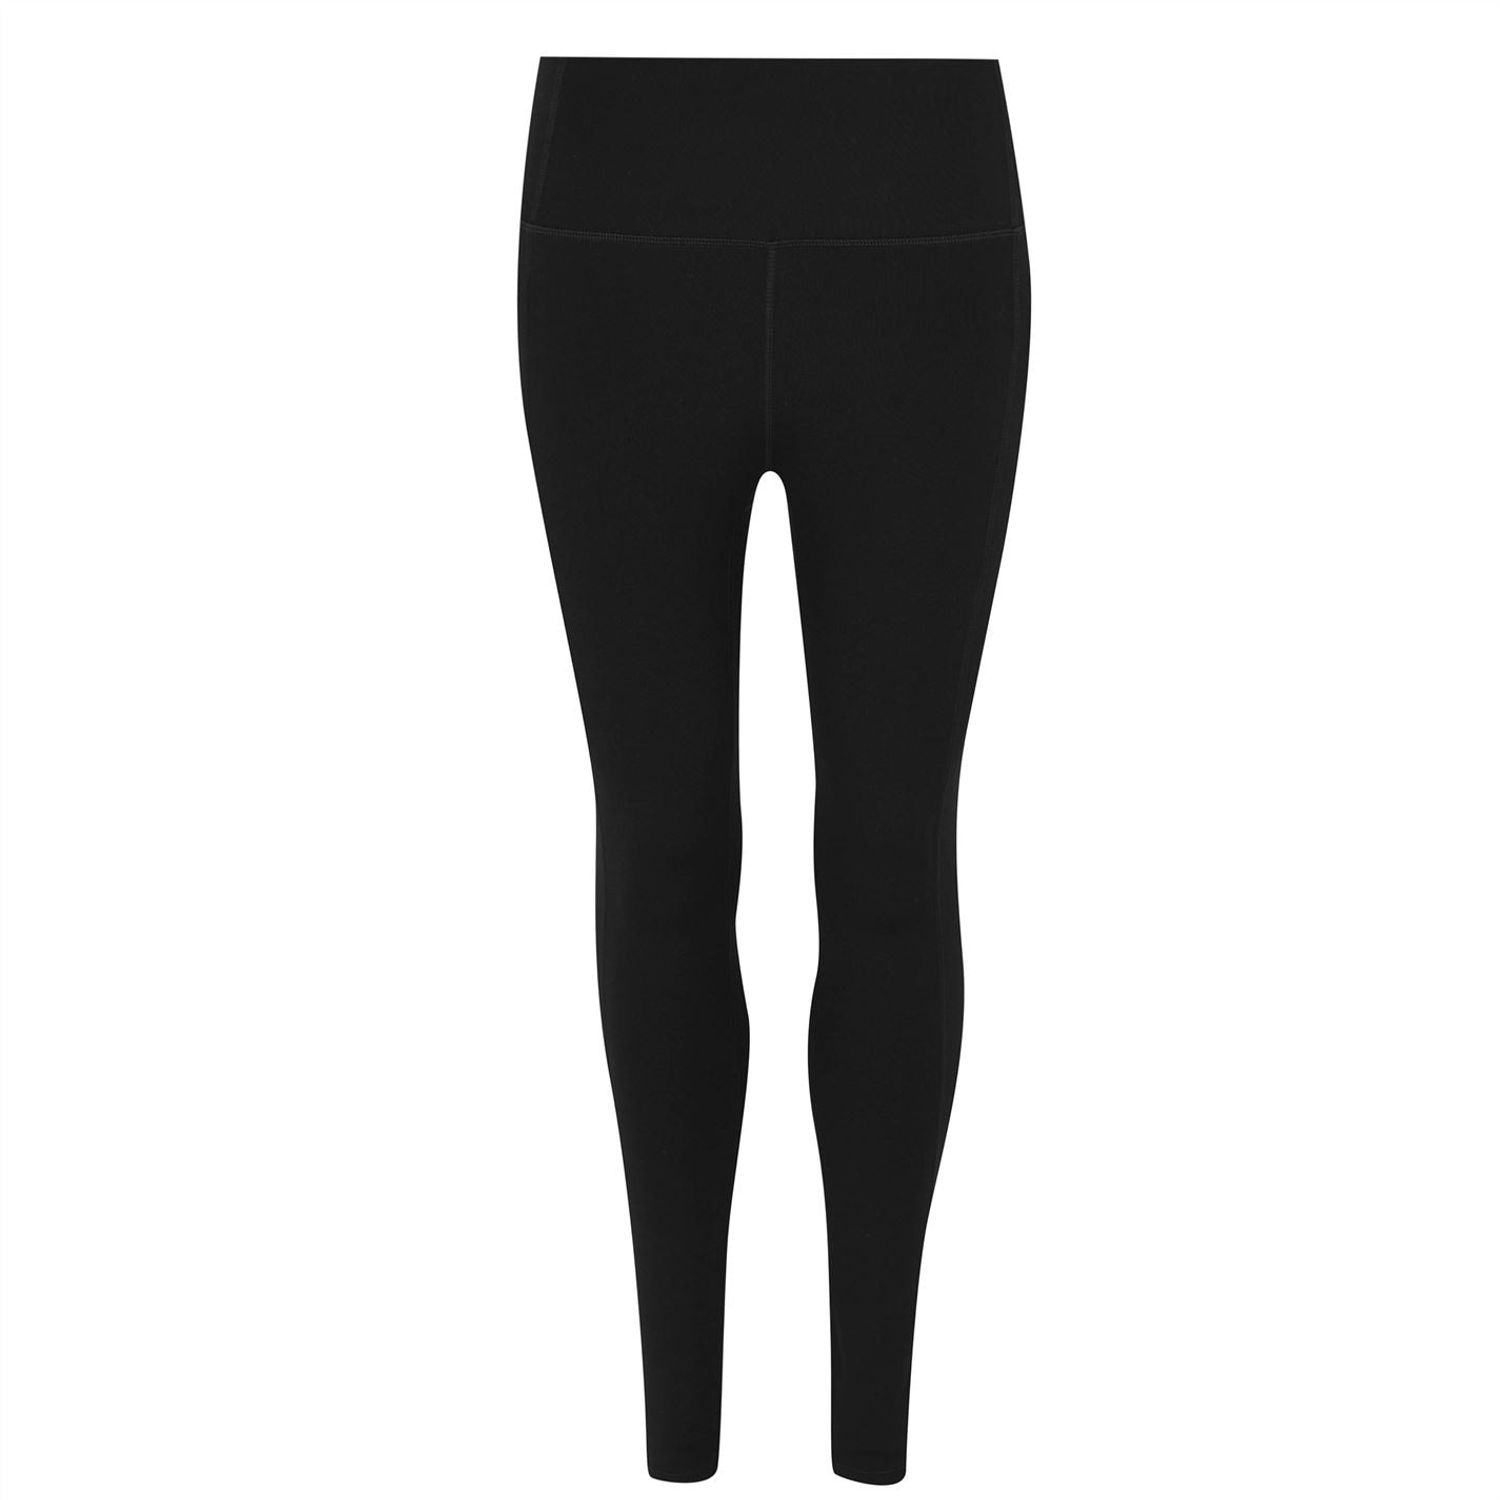 https://gtl-uk.prod.myauroraassets.com/p/431552/go-walk-high-waisted-leggings-ii-ladies-fr1803508skechers-go-walk-high-waisted-leggings-ii-ladies-fr1803508.jpg?t=rp&w=1500&h=1500